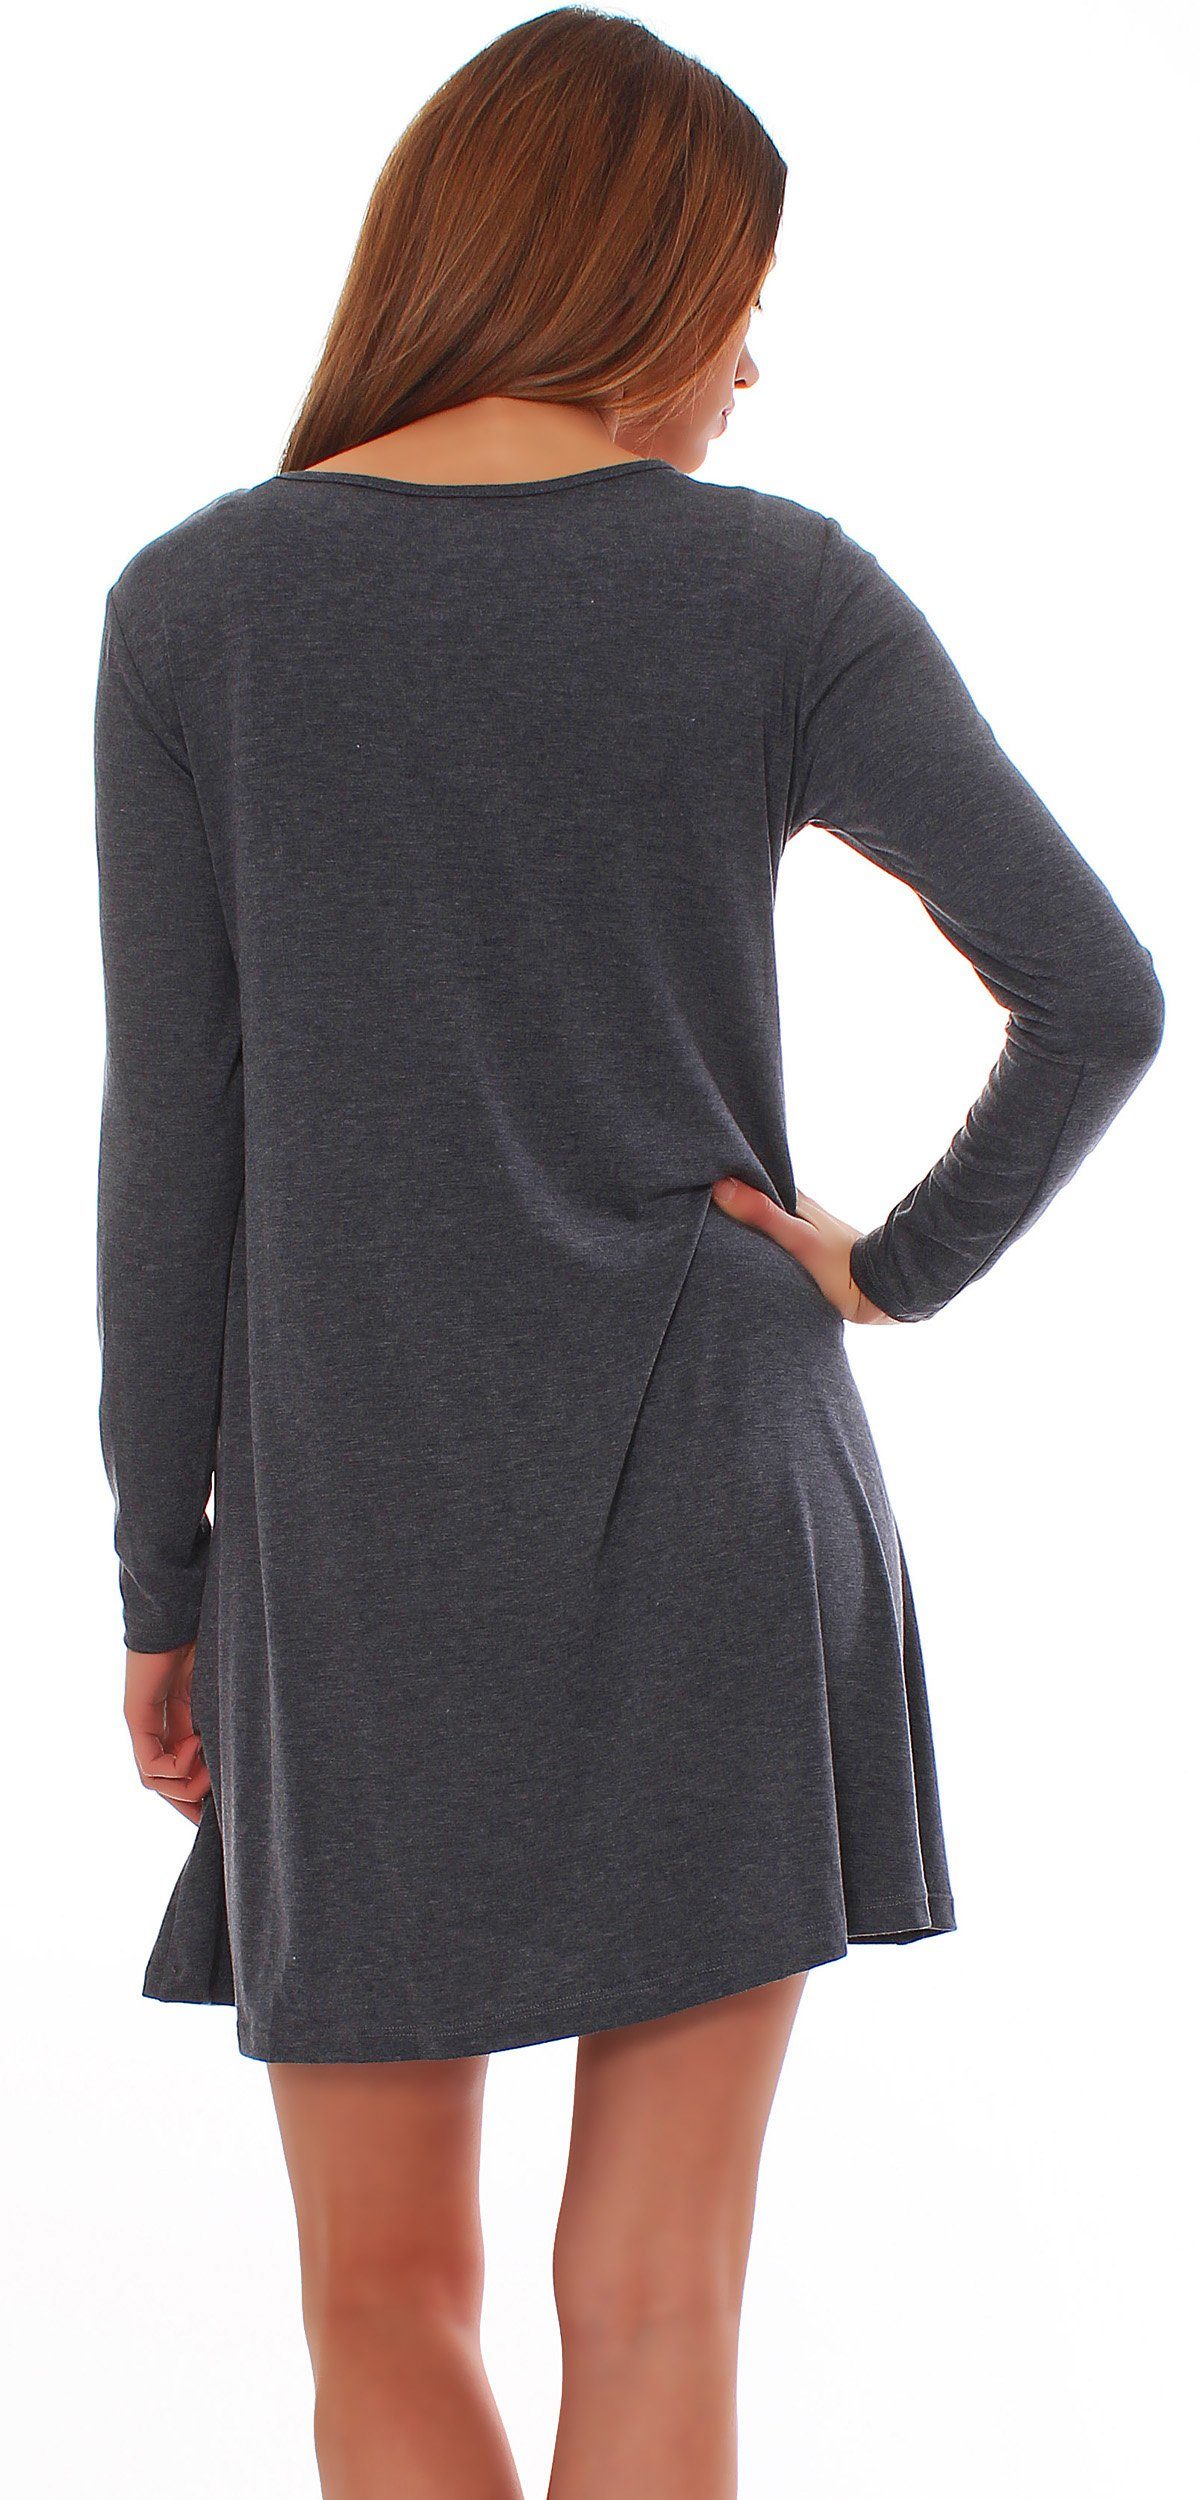 Taschen Pulli A-Linien-Kleid Graphit_Lang Tunika Mississhop Longshirt Kleid Tunika 6514 mit Minikleid